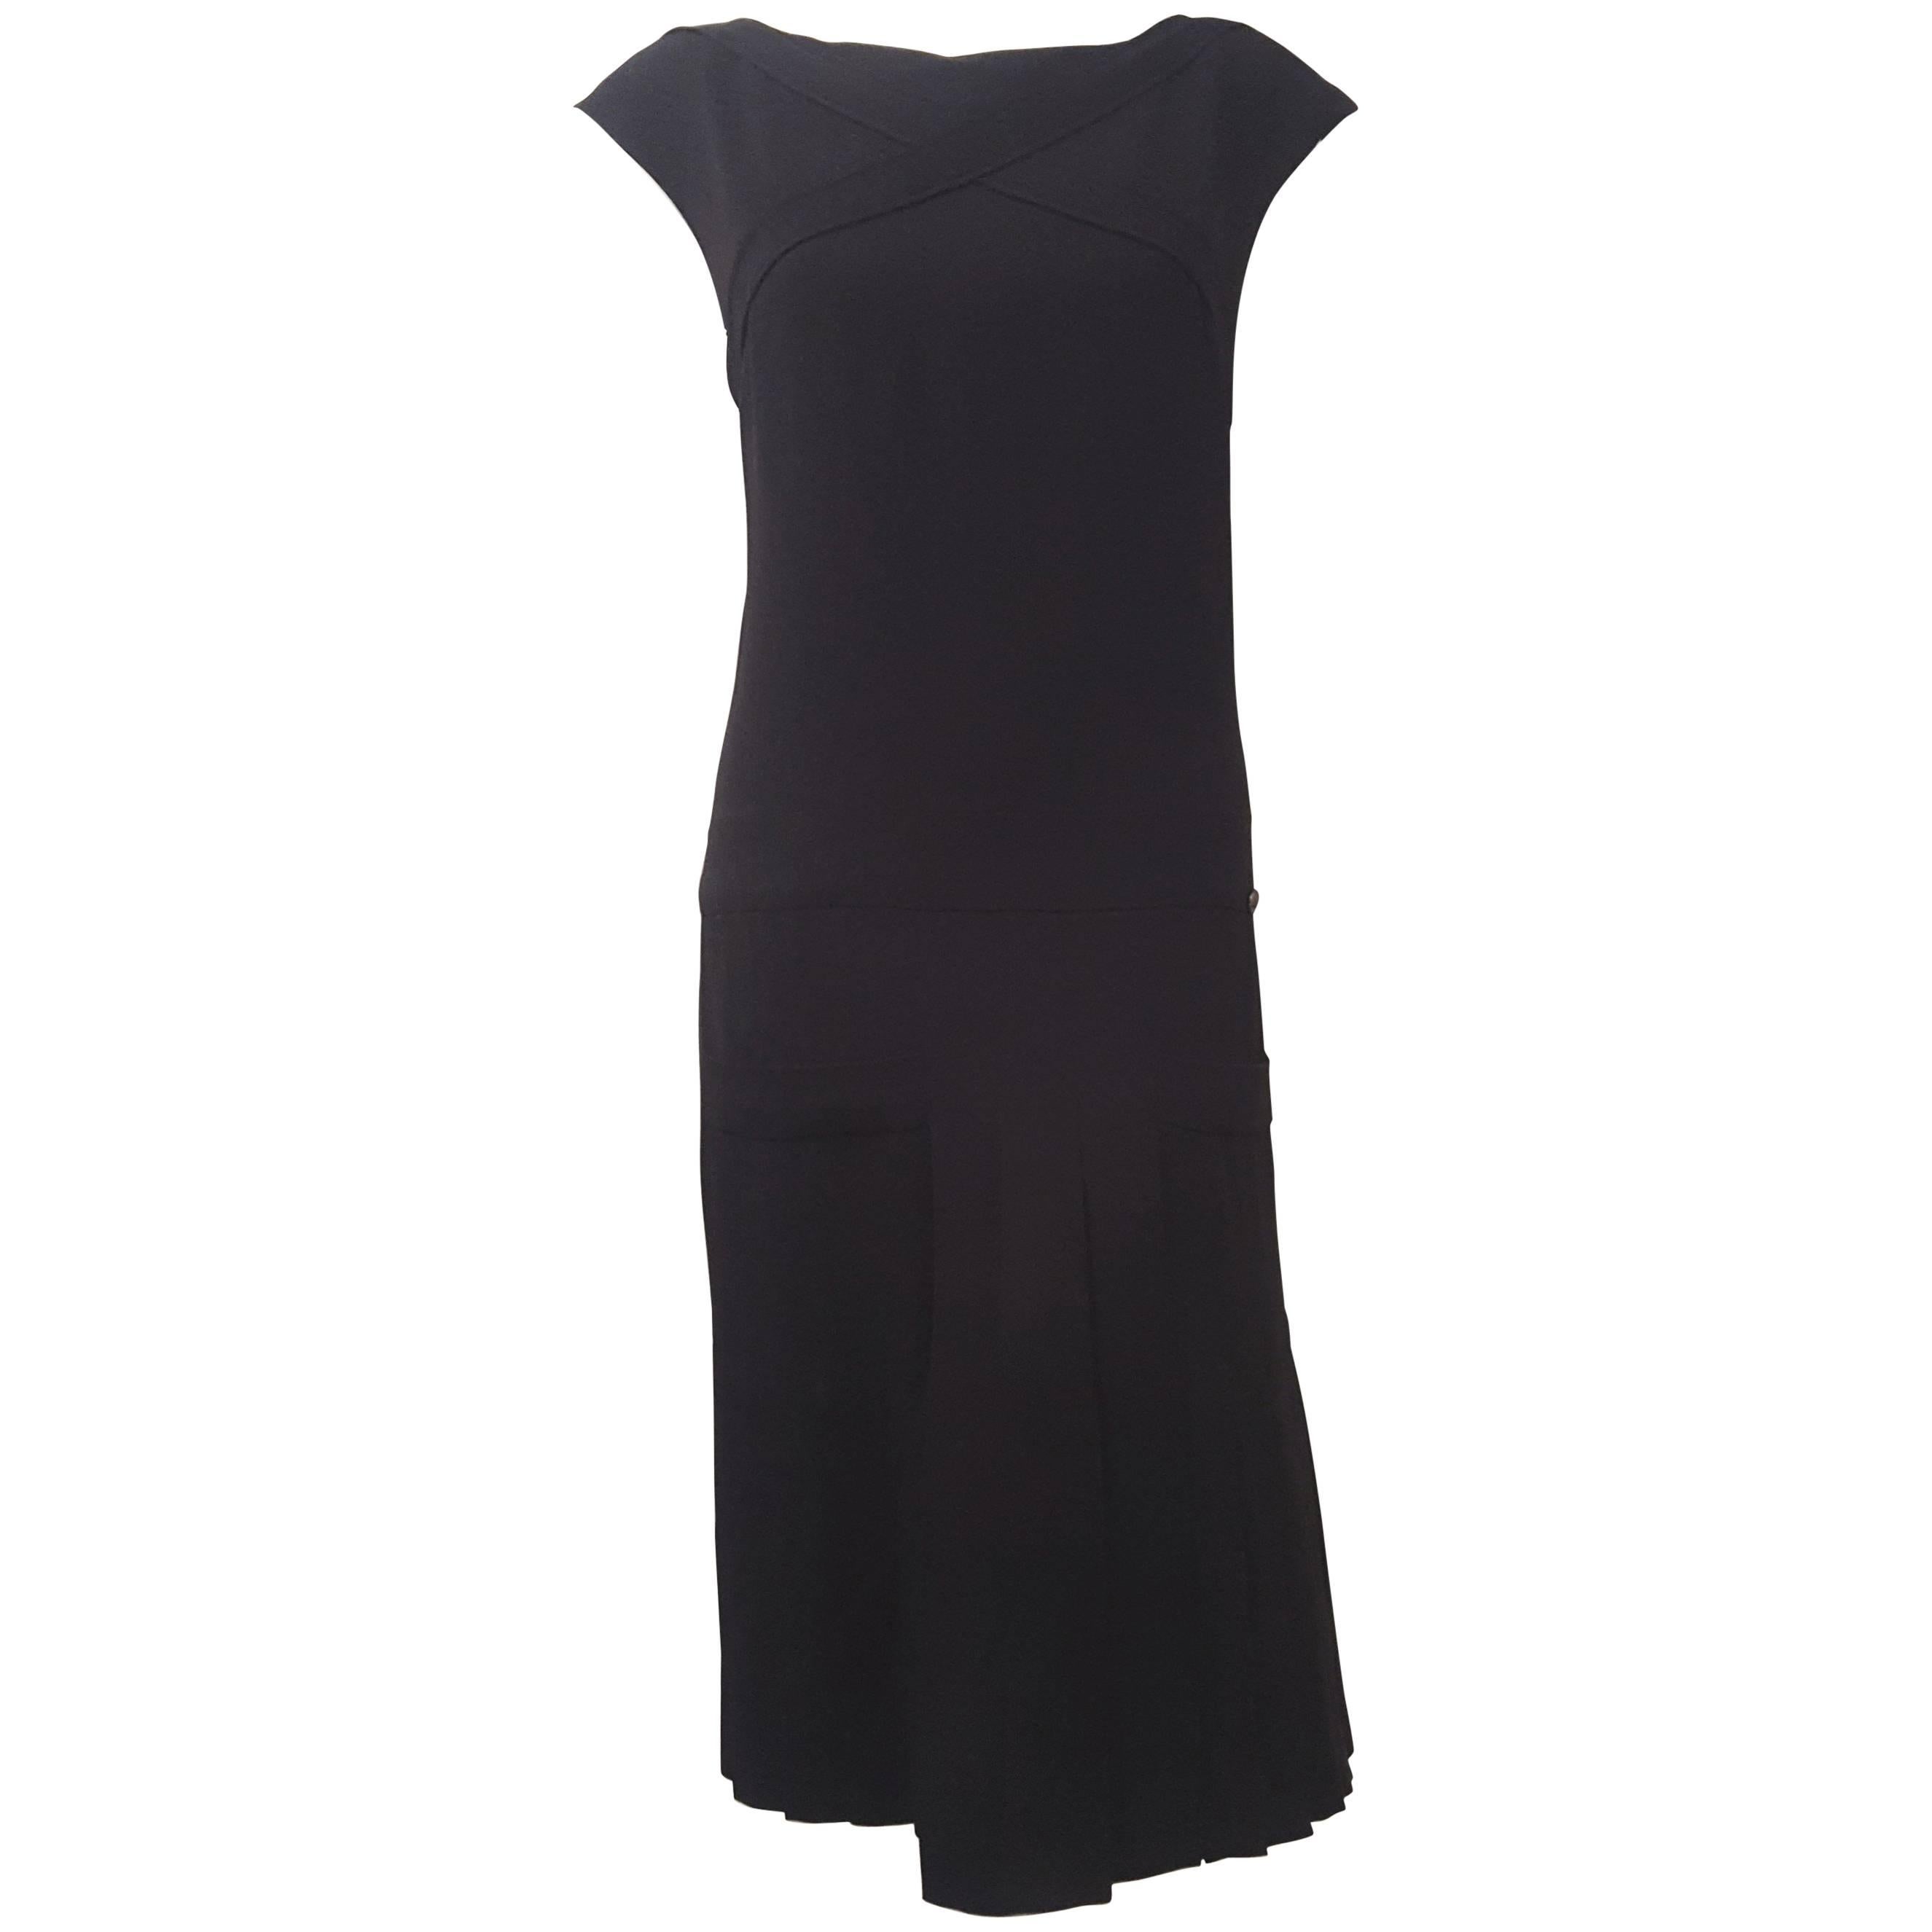 Classy Chanel Black Silk Dress with Drop Waist Crisscross Detail at Neckline For Sale